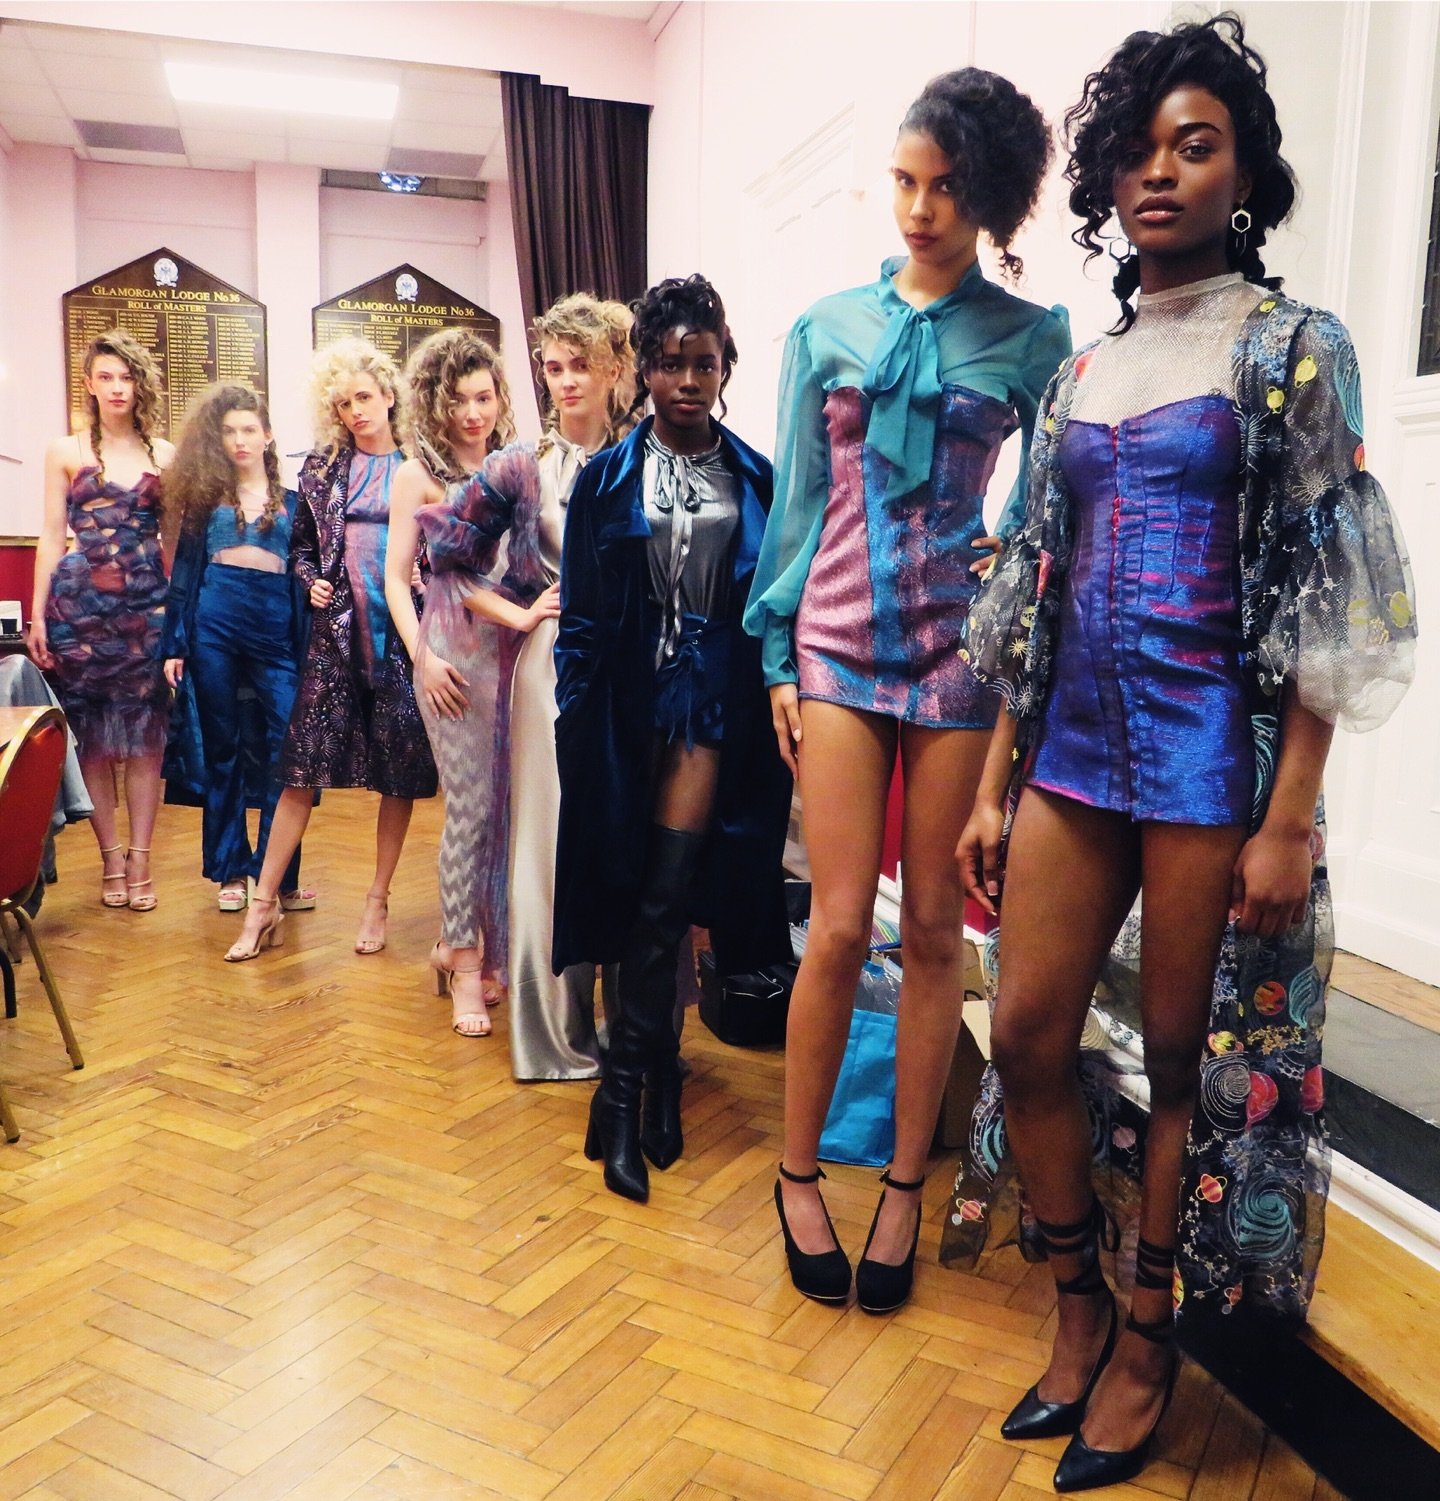 Behind the scenes at Cardiff fashion week. 

Thanks to the stunning models for bringing my collection to life 😍

#ostararose #ostararosedesigns #sustainablefashion #handmade #deadstock #britishfashioncouncil #britishfashionawards #picoftheday #model